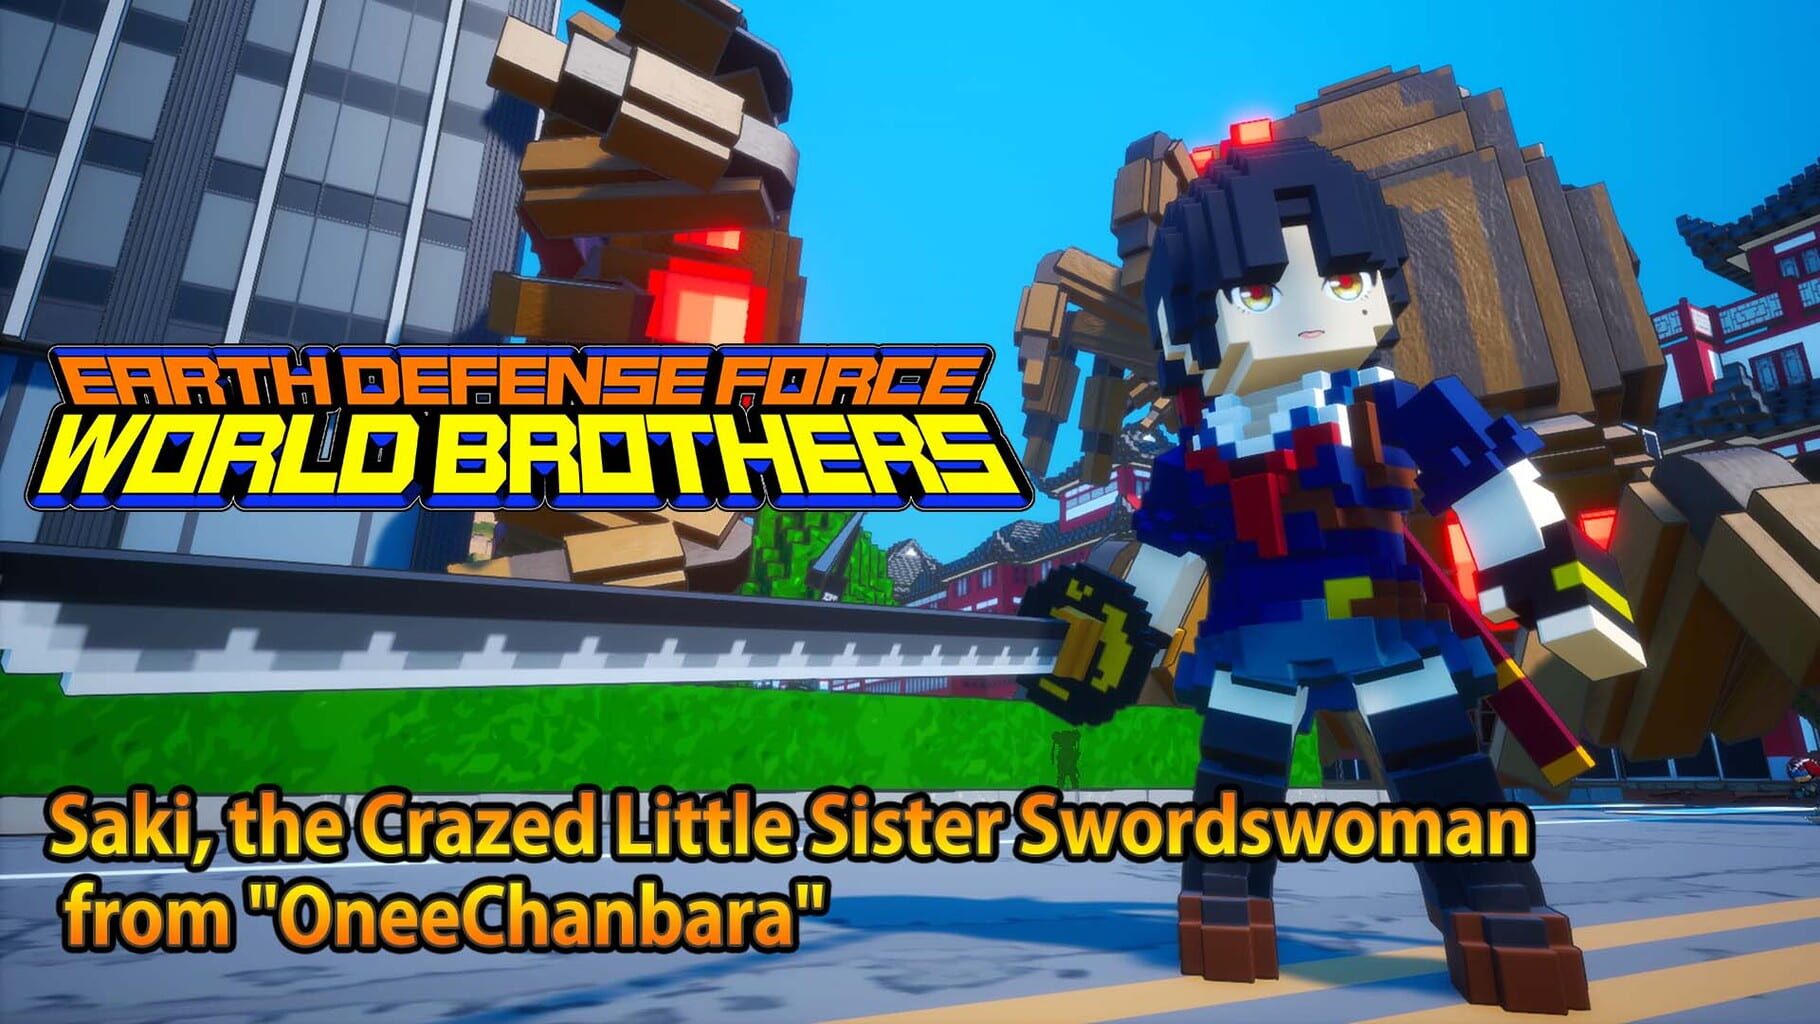 Earth Defense Force: World Brothers - Saki, the Crazed Little Sister Swordswoman from "OneeChanbara" artwork